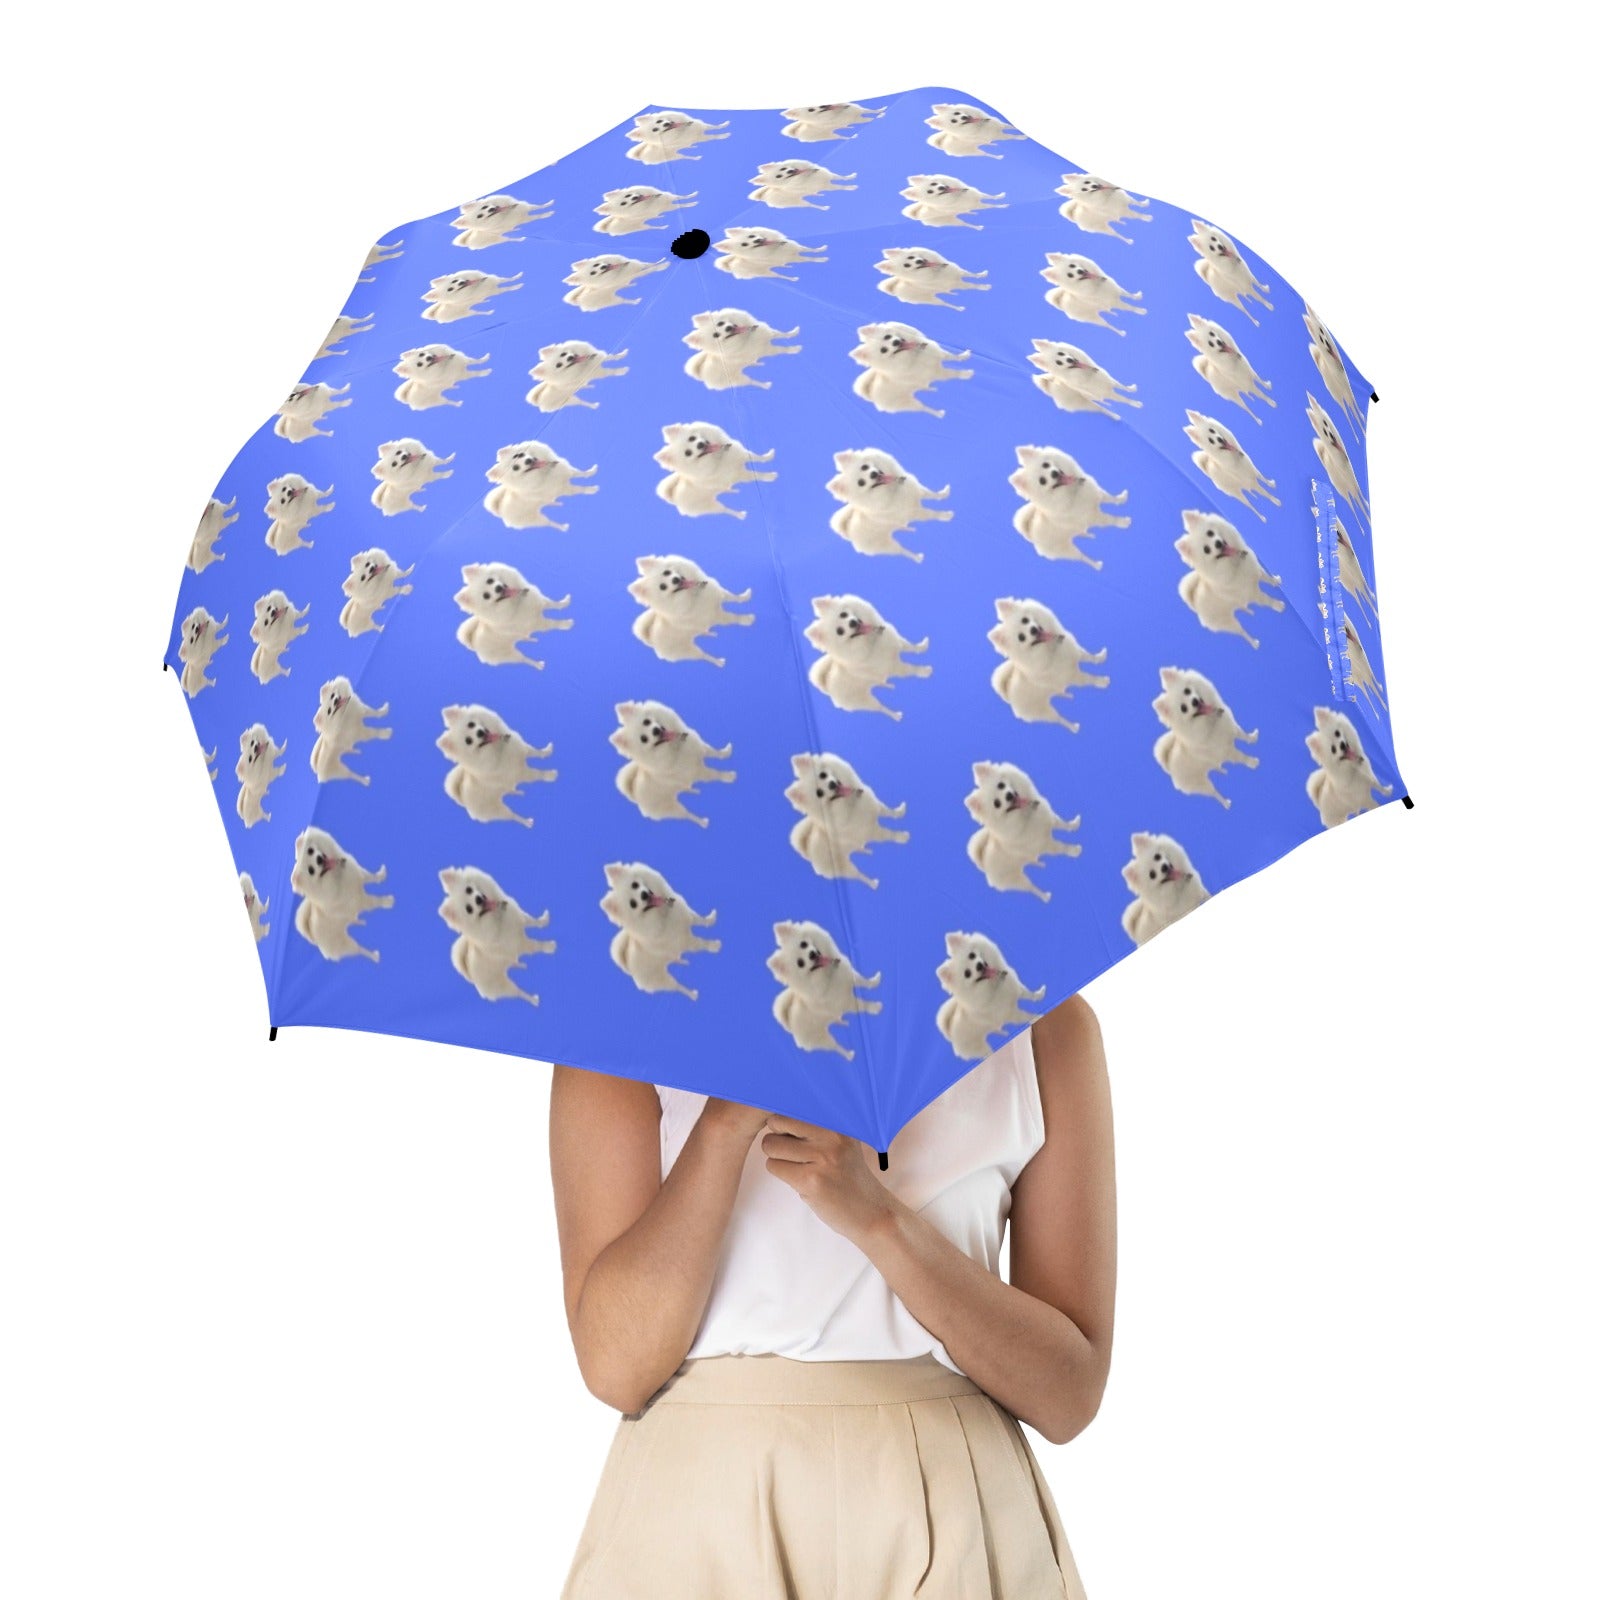 Pomeranian Umbrella - White